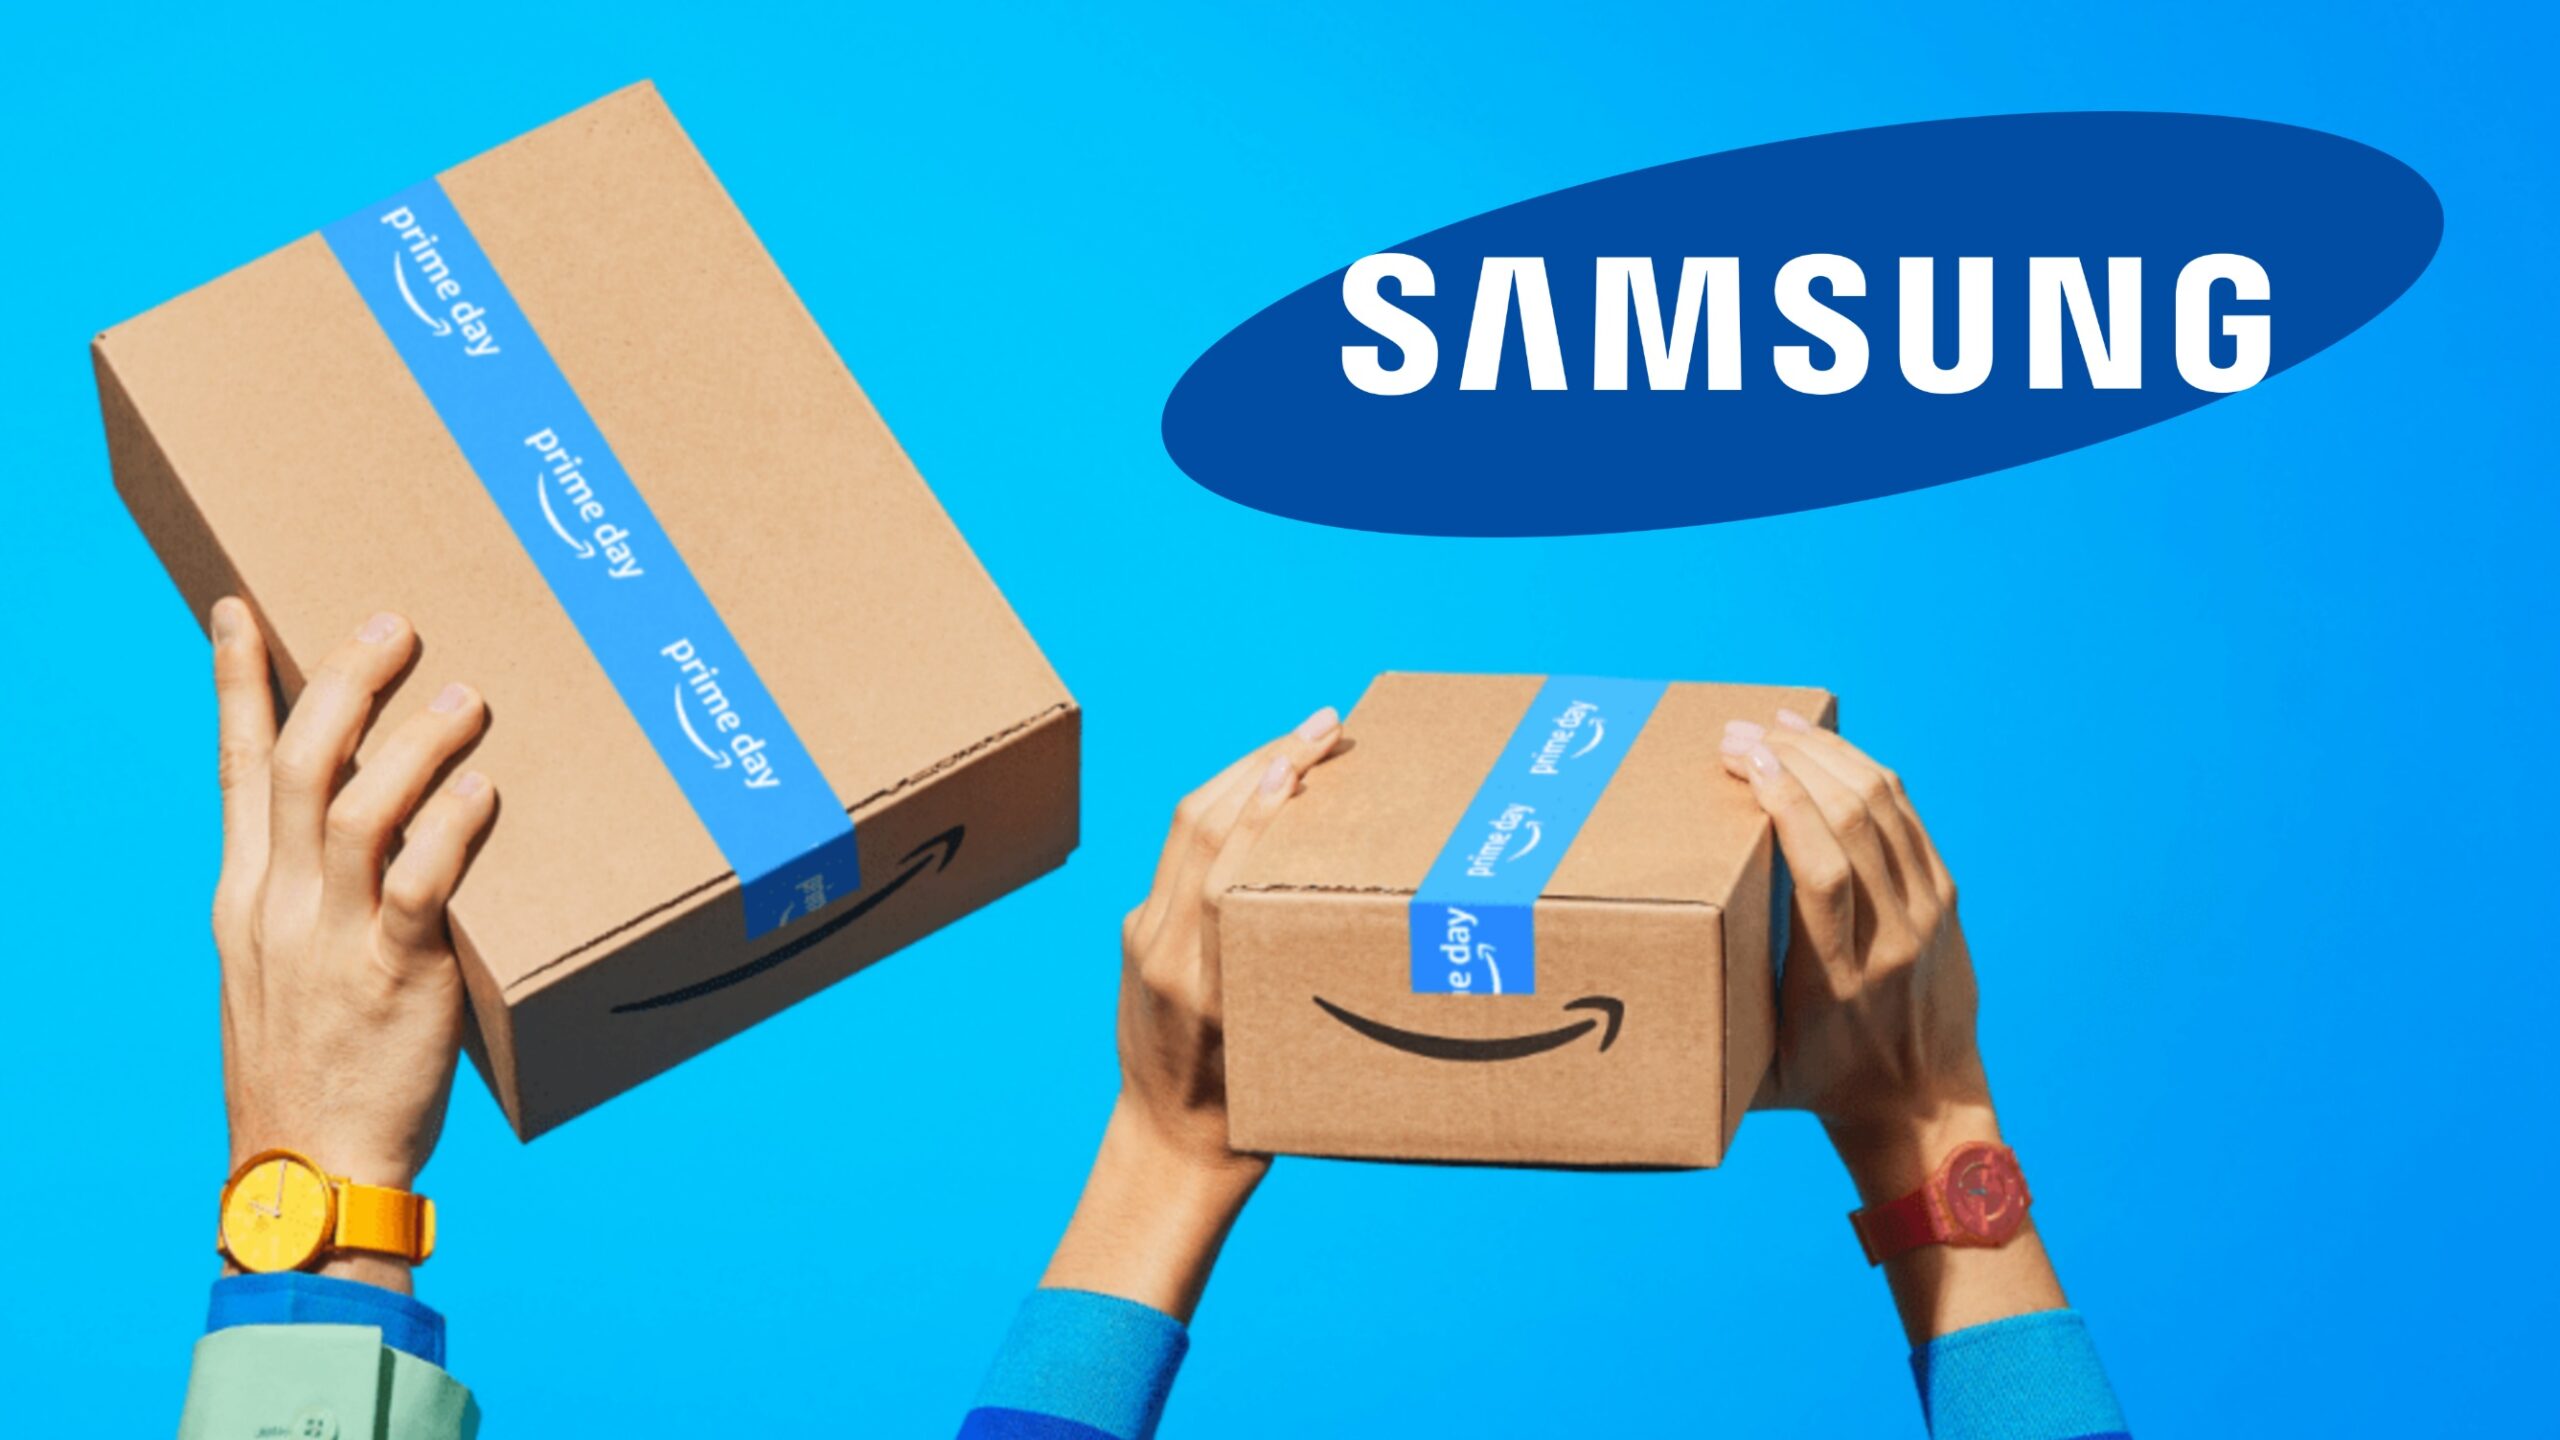 Samsung Amazon Prime Day